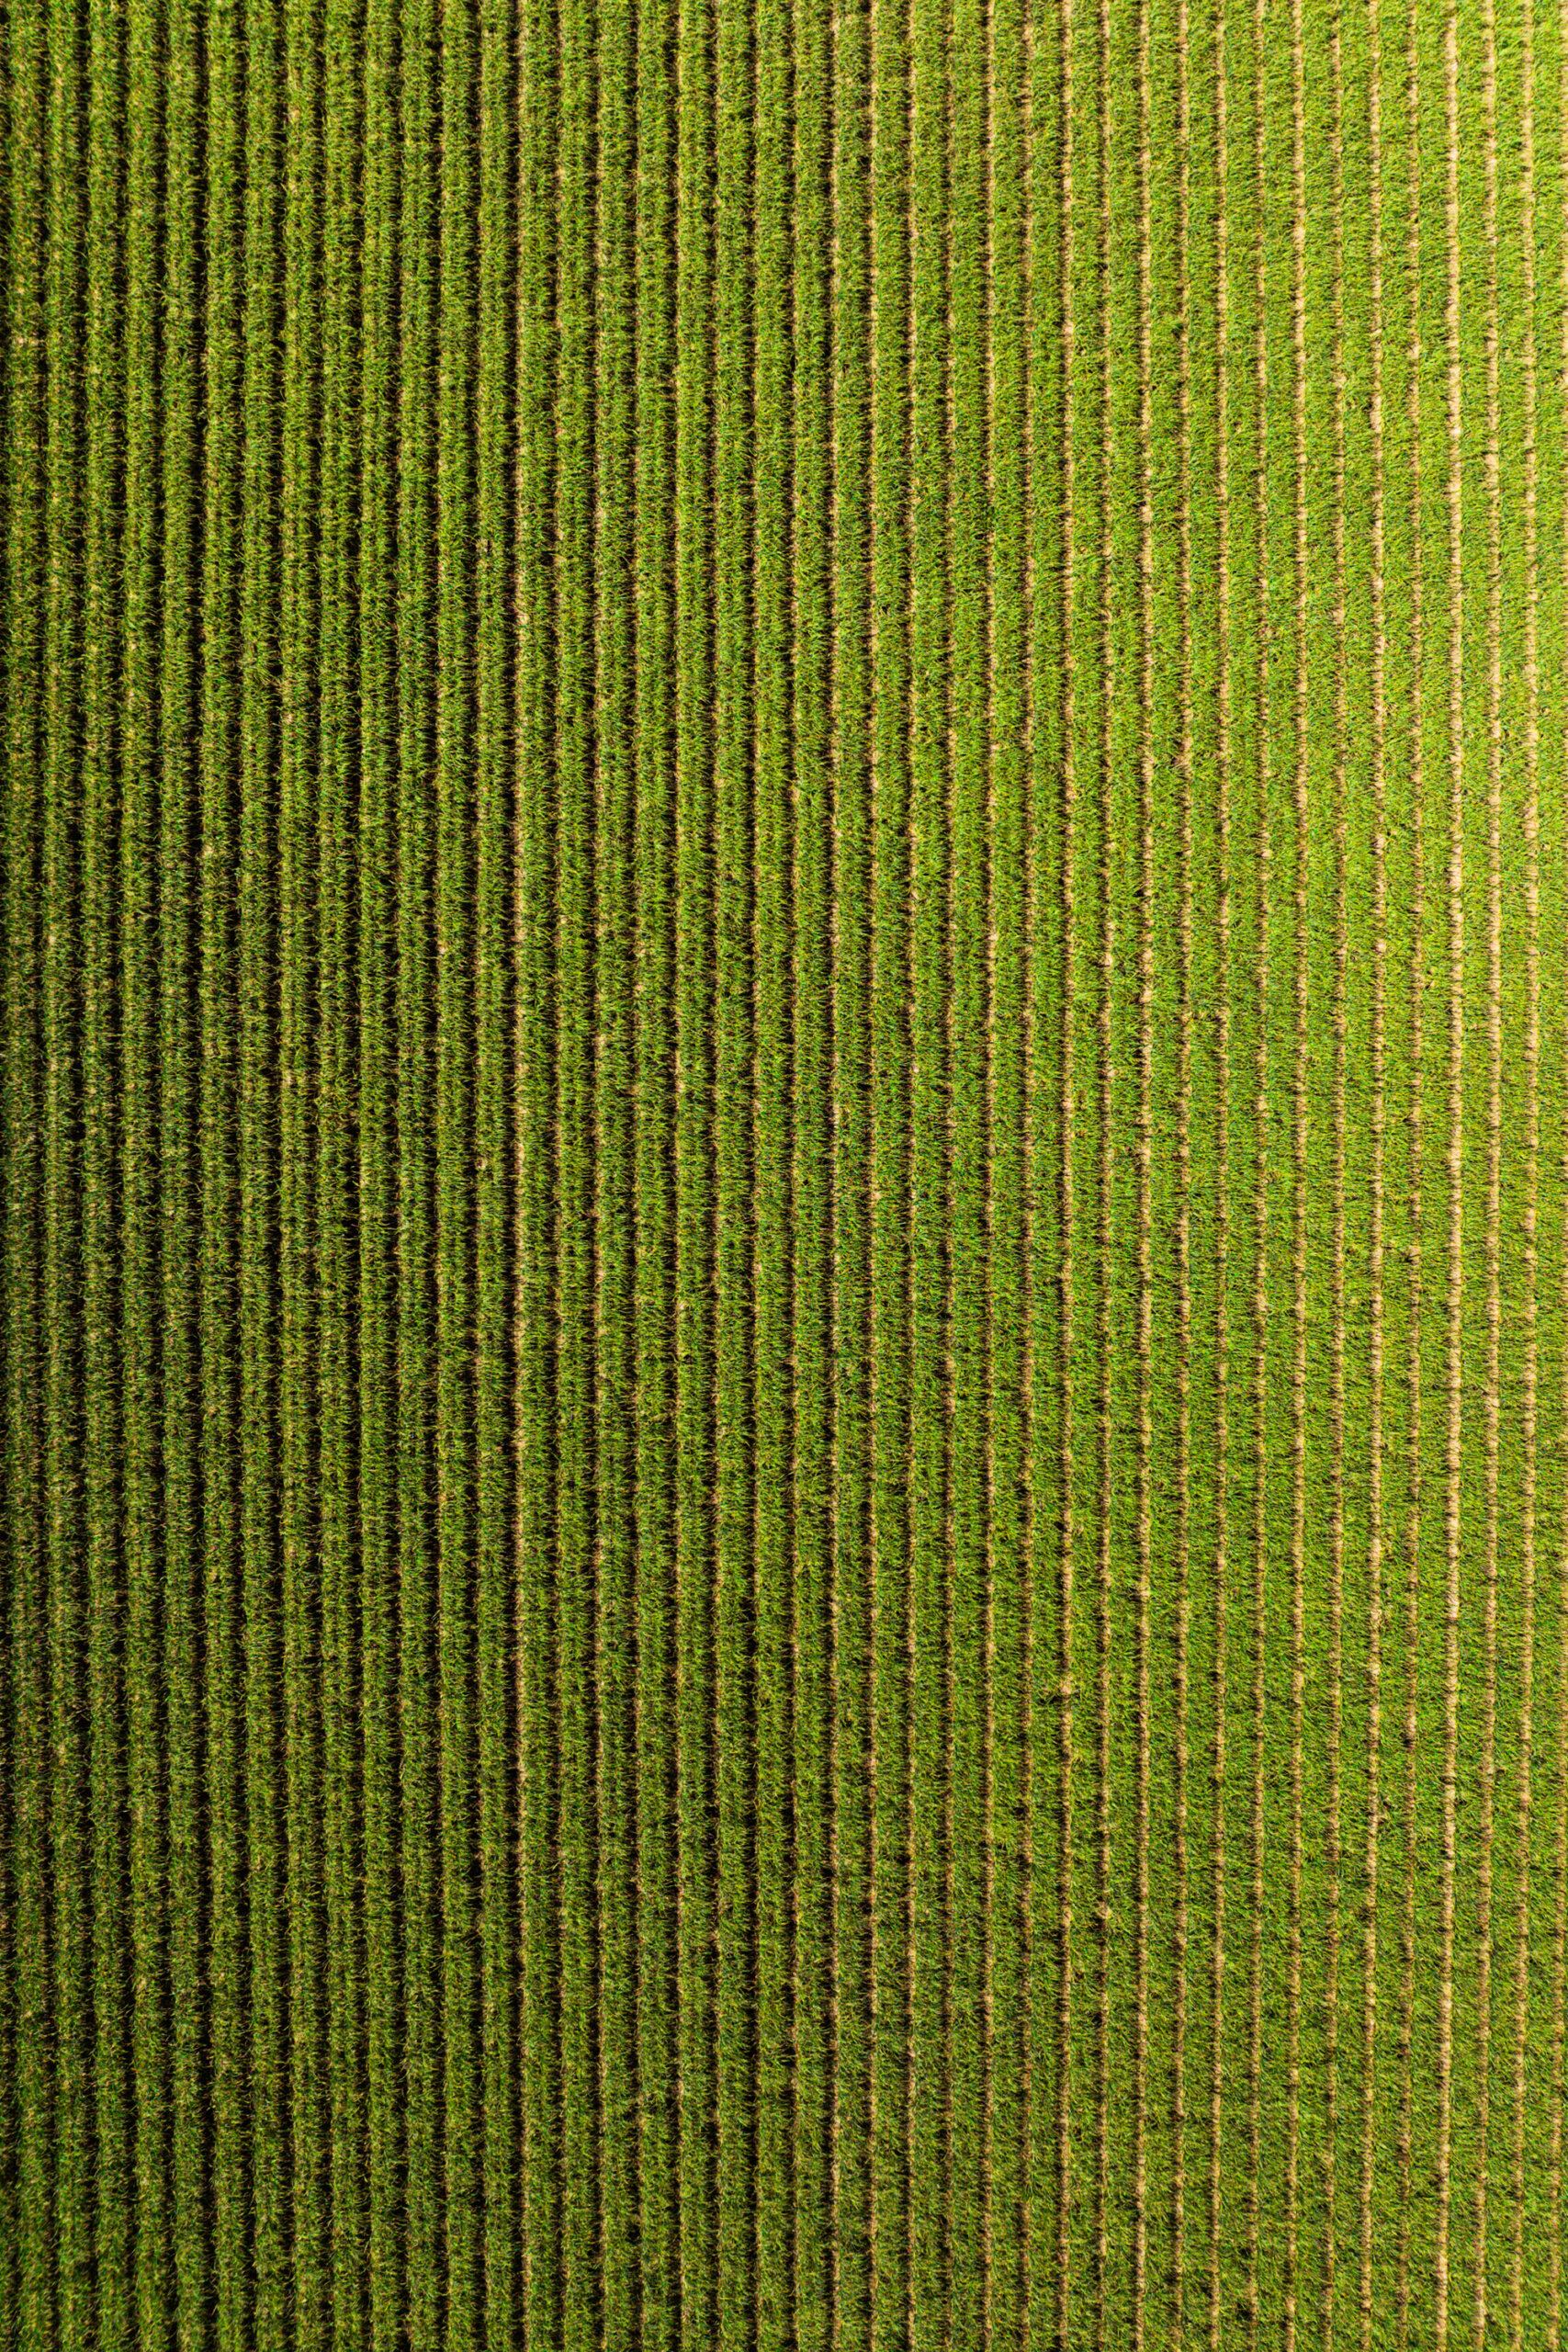 Aerial view of a garlic field near Watsonville, Calif.